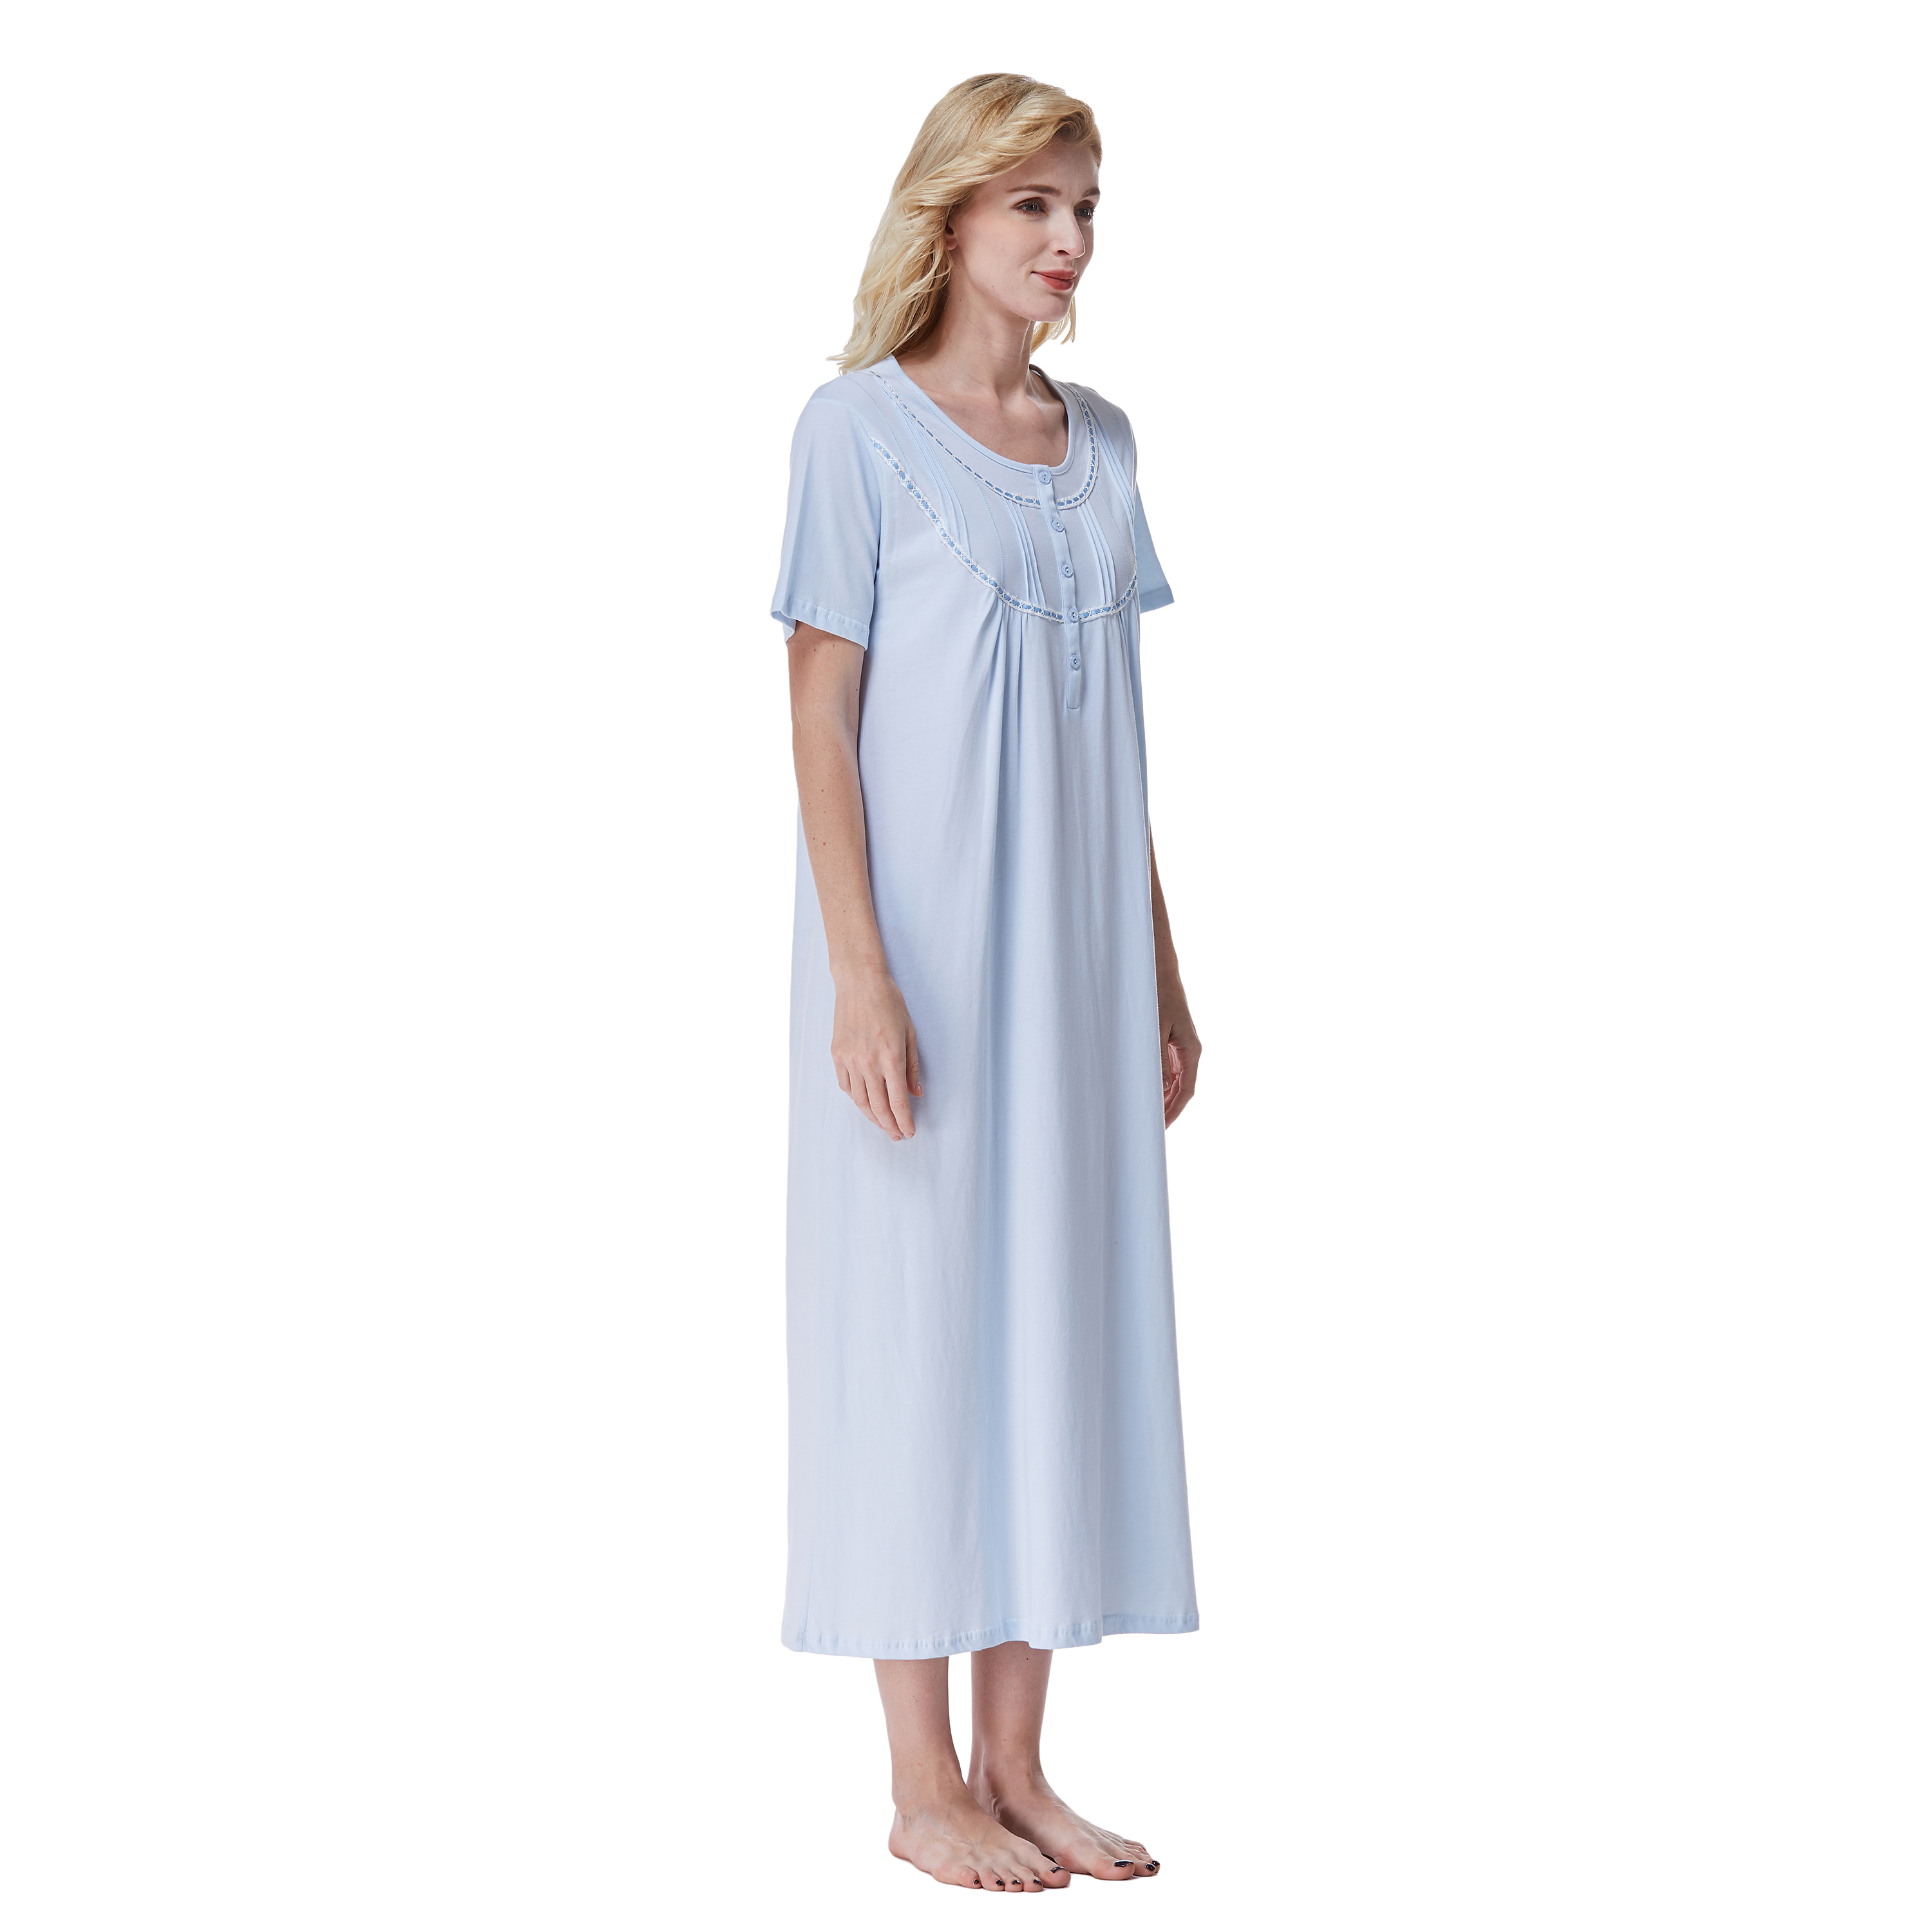 Keyocean Women's Maternity Dress 100% Cotton, Soft Short Sleeve  Breastfeeding Nightgown and Nursing Dress, Floral Print - K18029 - Keyocean  Cotton Nightgowns for Women